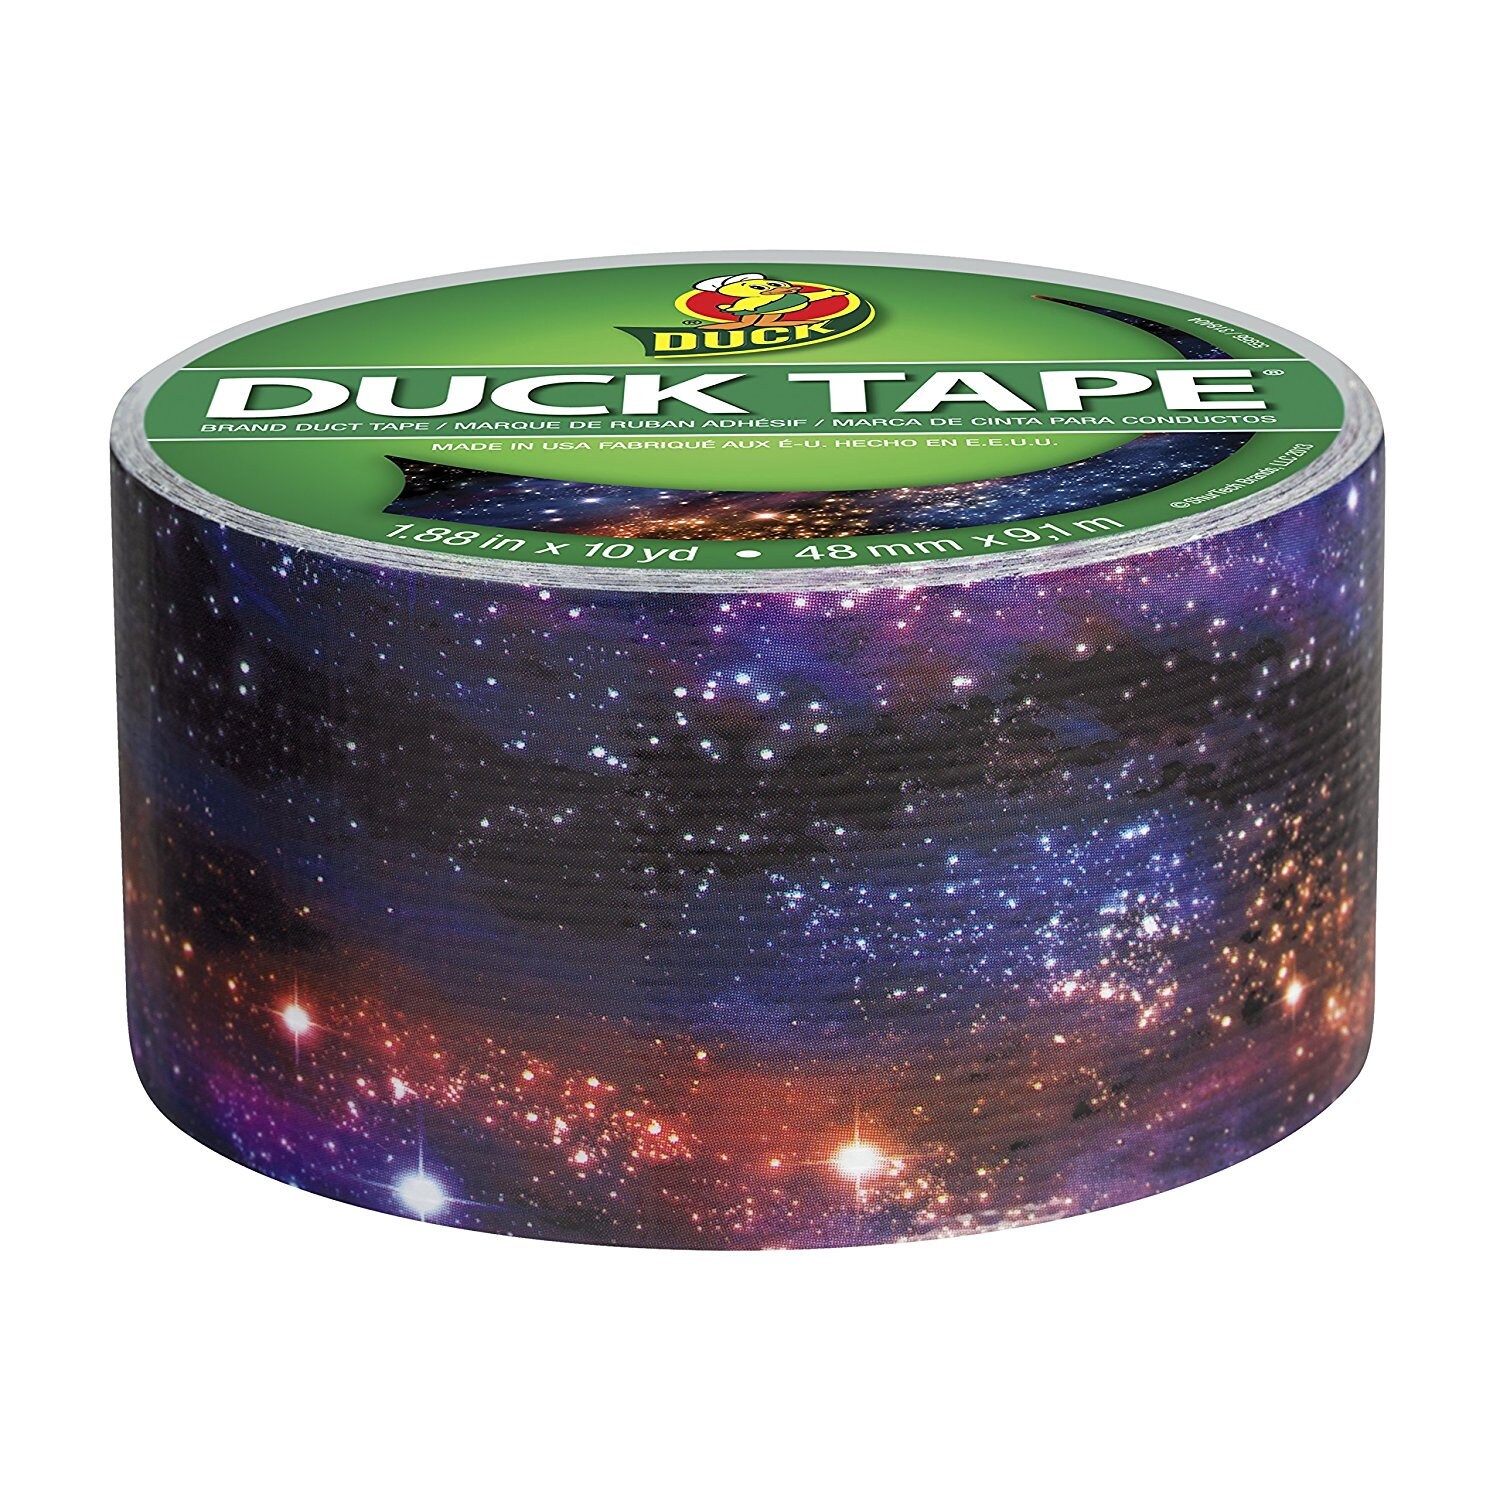 Customizable Printed Duck Tape® - Argyle Design